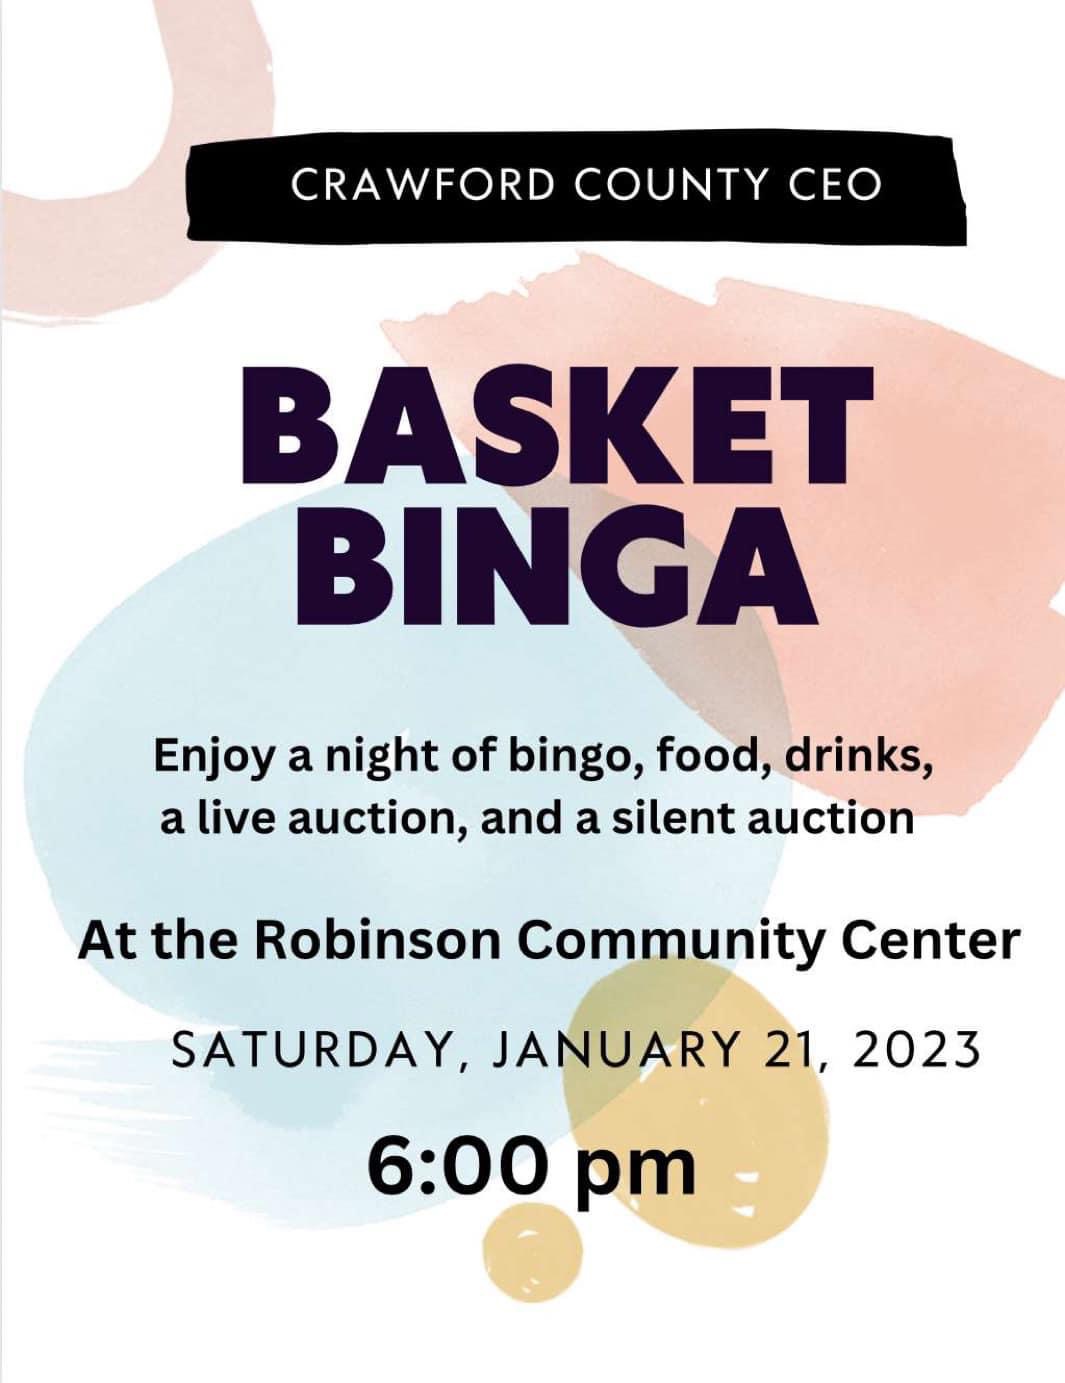 Crawford County CEO Basket Binga!